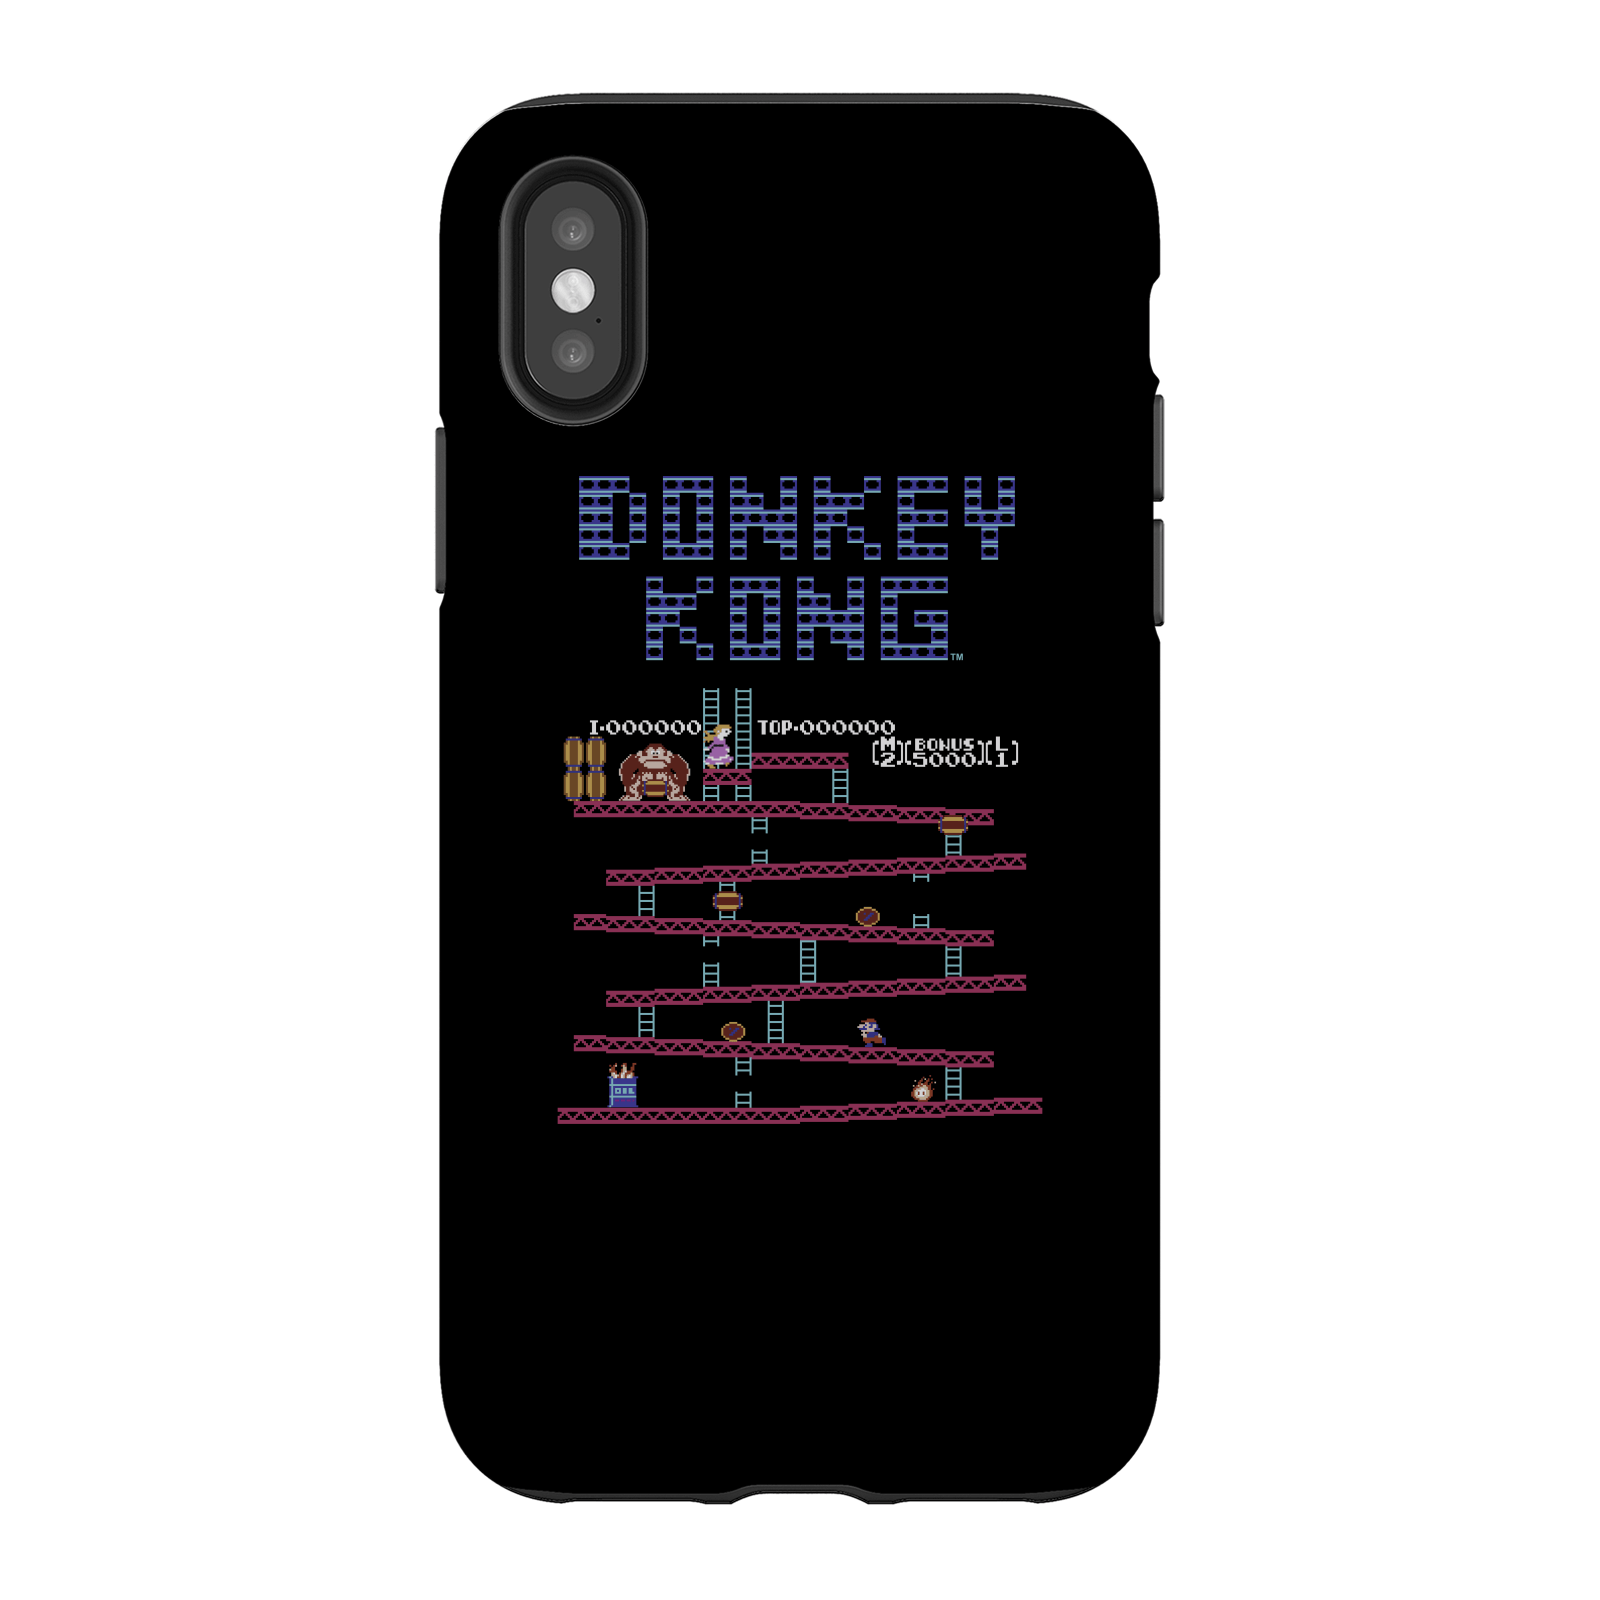 Nintendo Donkey Kong Retro Phone Case - iPhone X - Tough Case - Matte